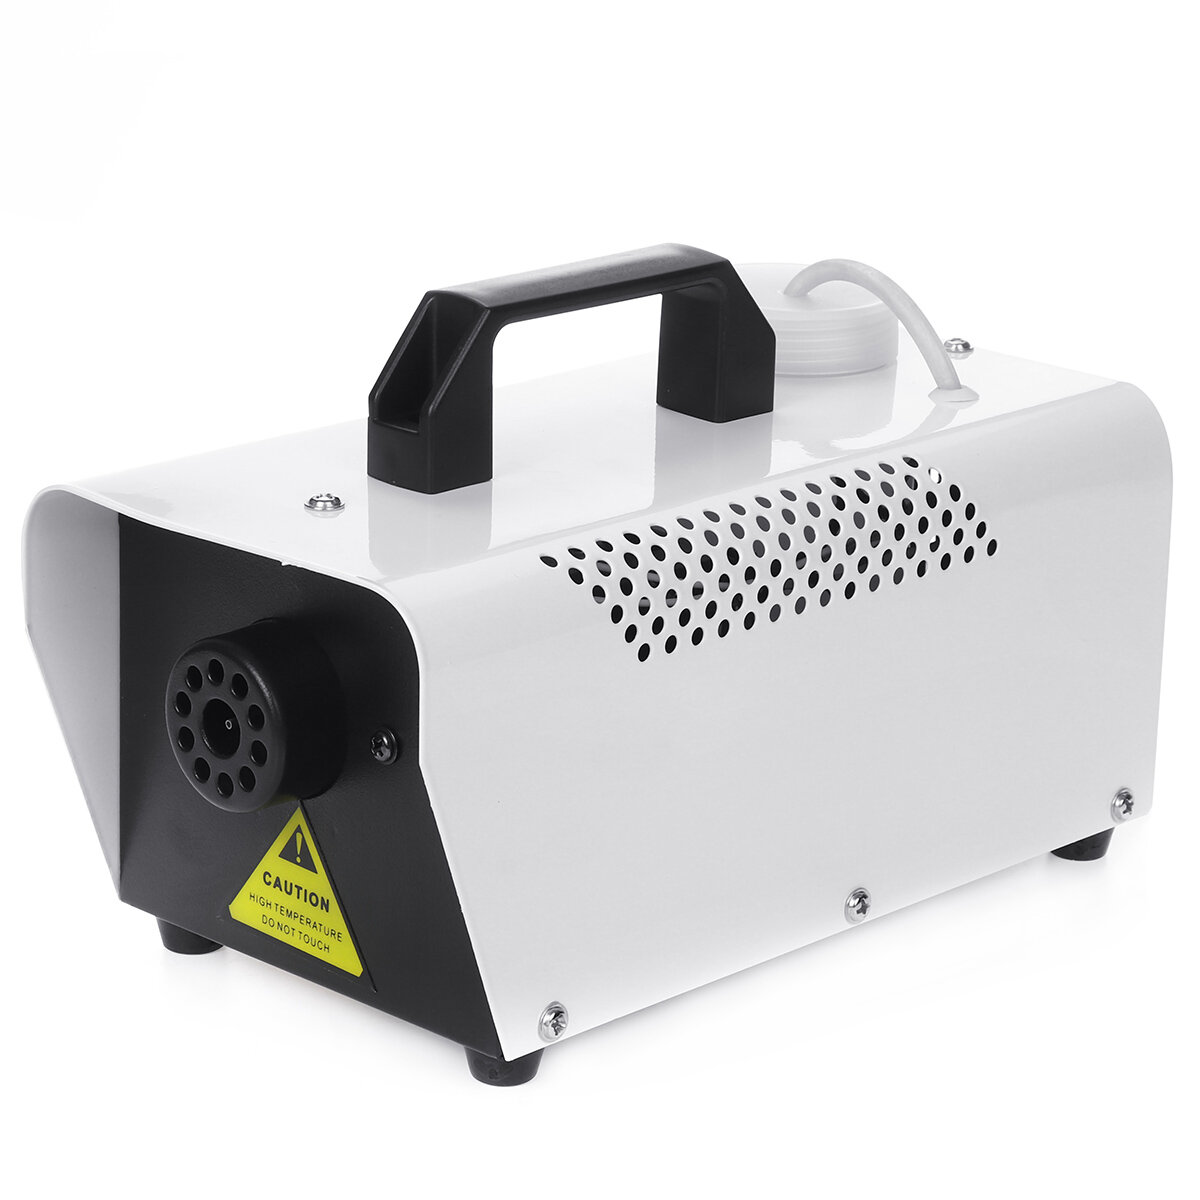 

AC220-240V 400W Electric Sprayer Handheld Portable Fogger Disinfection Machine W/ Remote Control